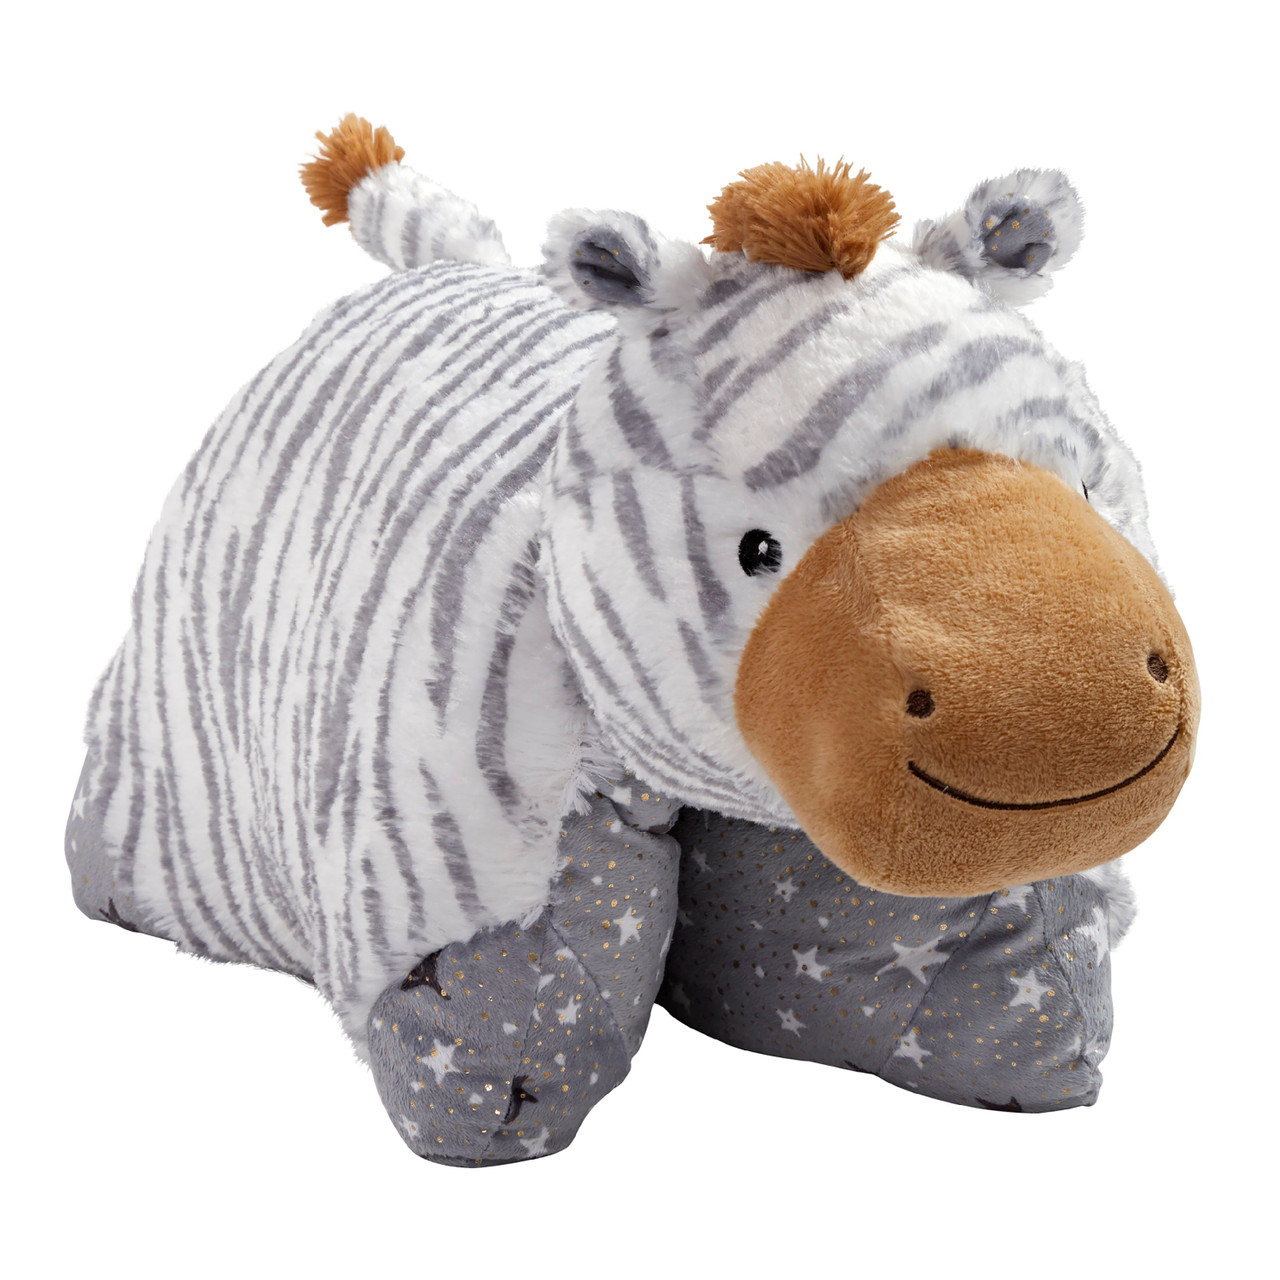 Pillow Pets Naturally Comfy Zebra Stuffed Animal Plush Toy